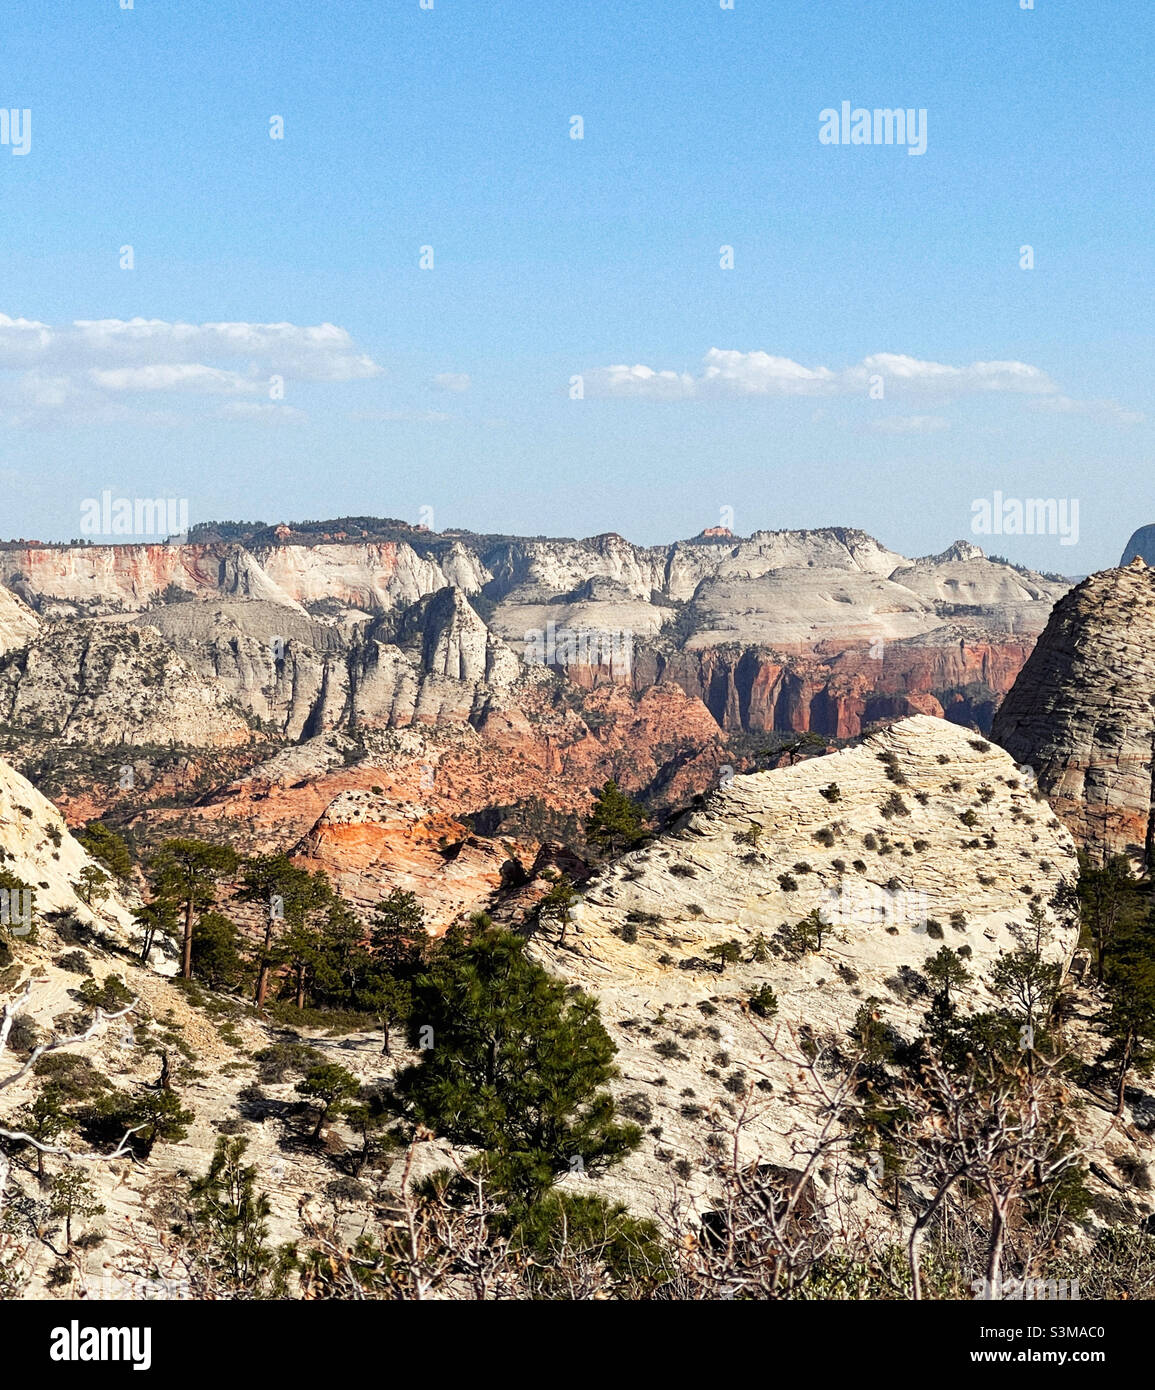 Observe el cañón Kolob en el parque nacional de Zion Foto de stock